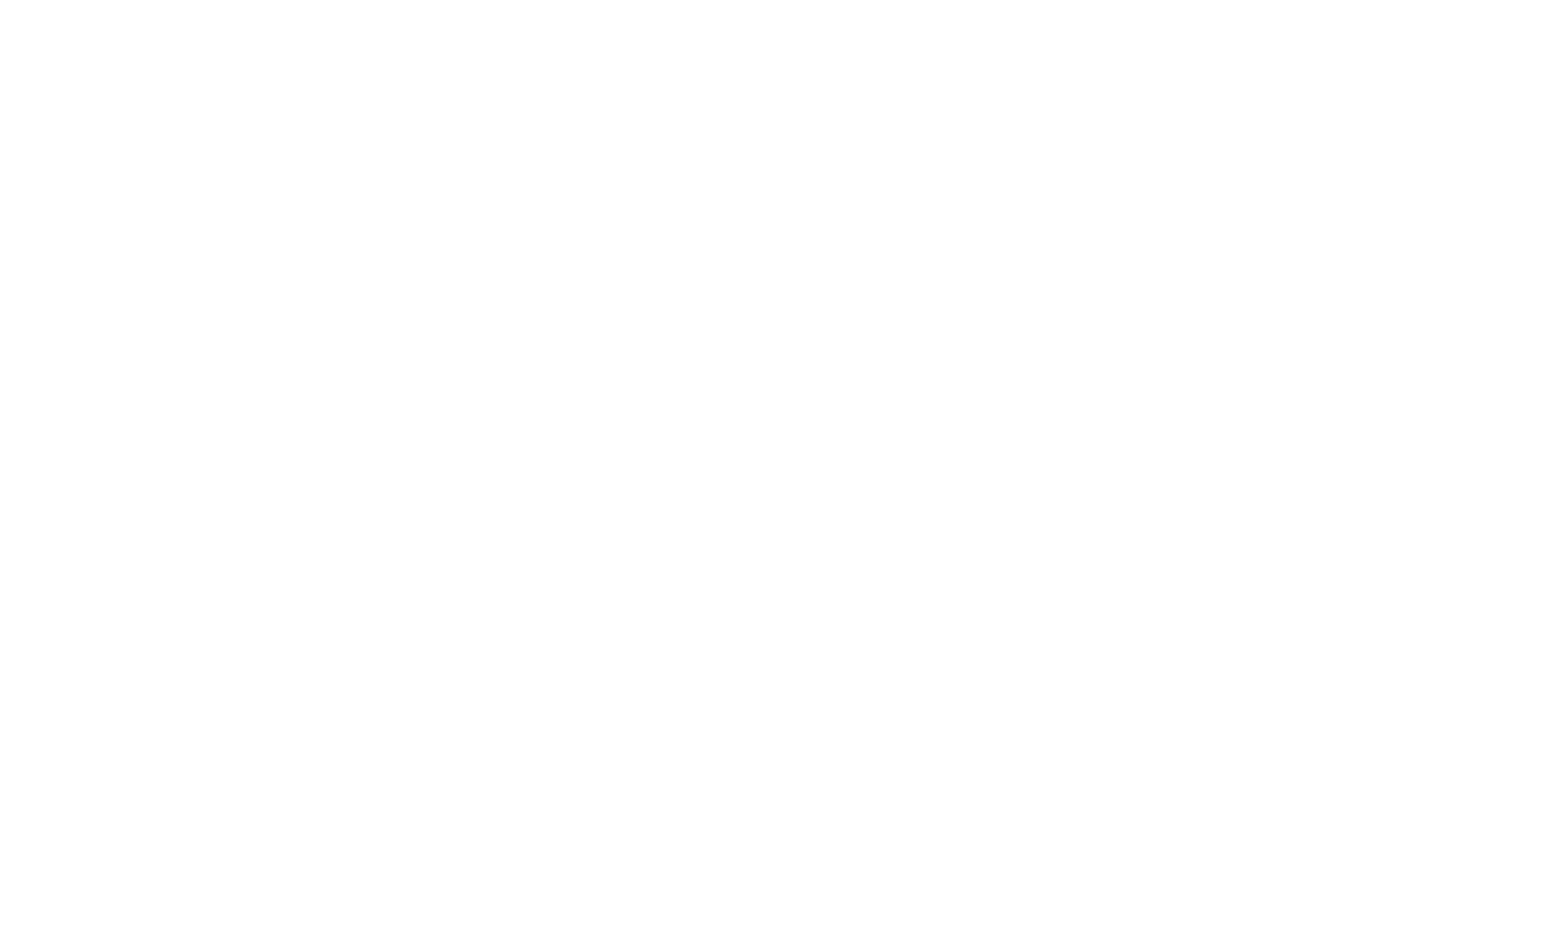 Georg Fischer logo for dark backgrounds (transparent PNG)